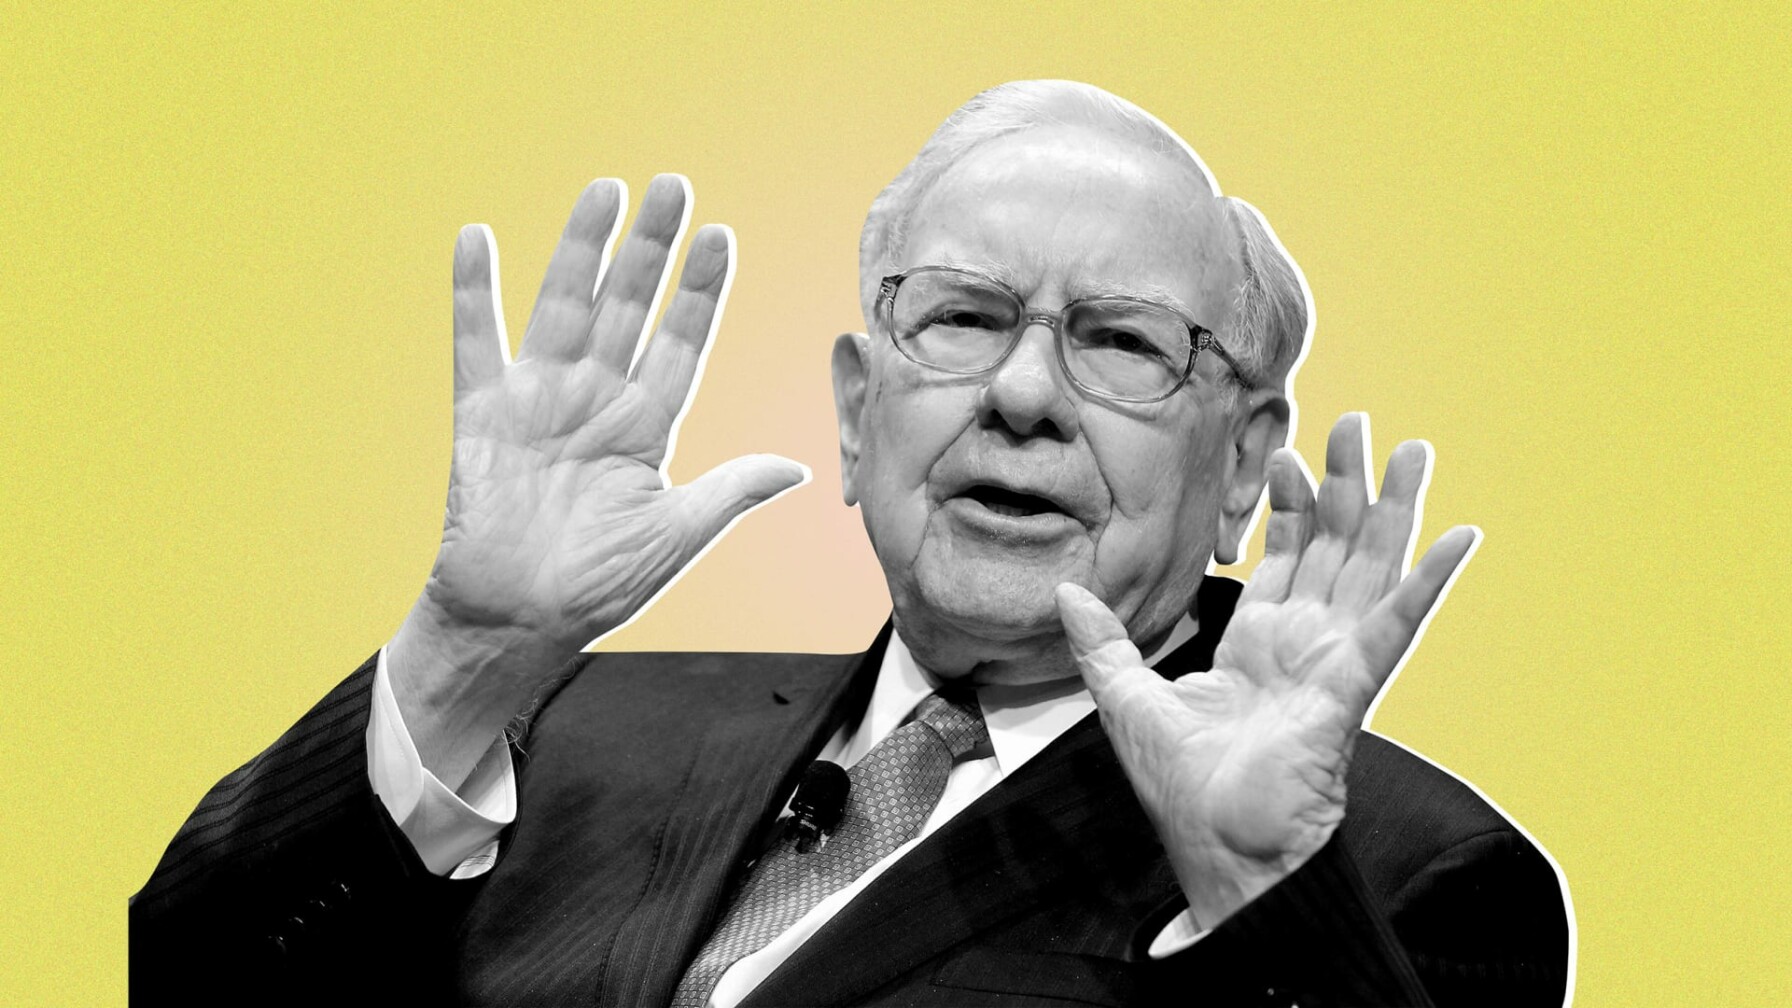 Warren Buffet on leadership success